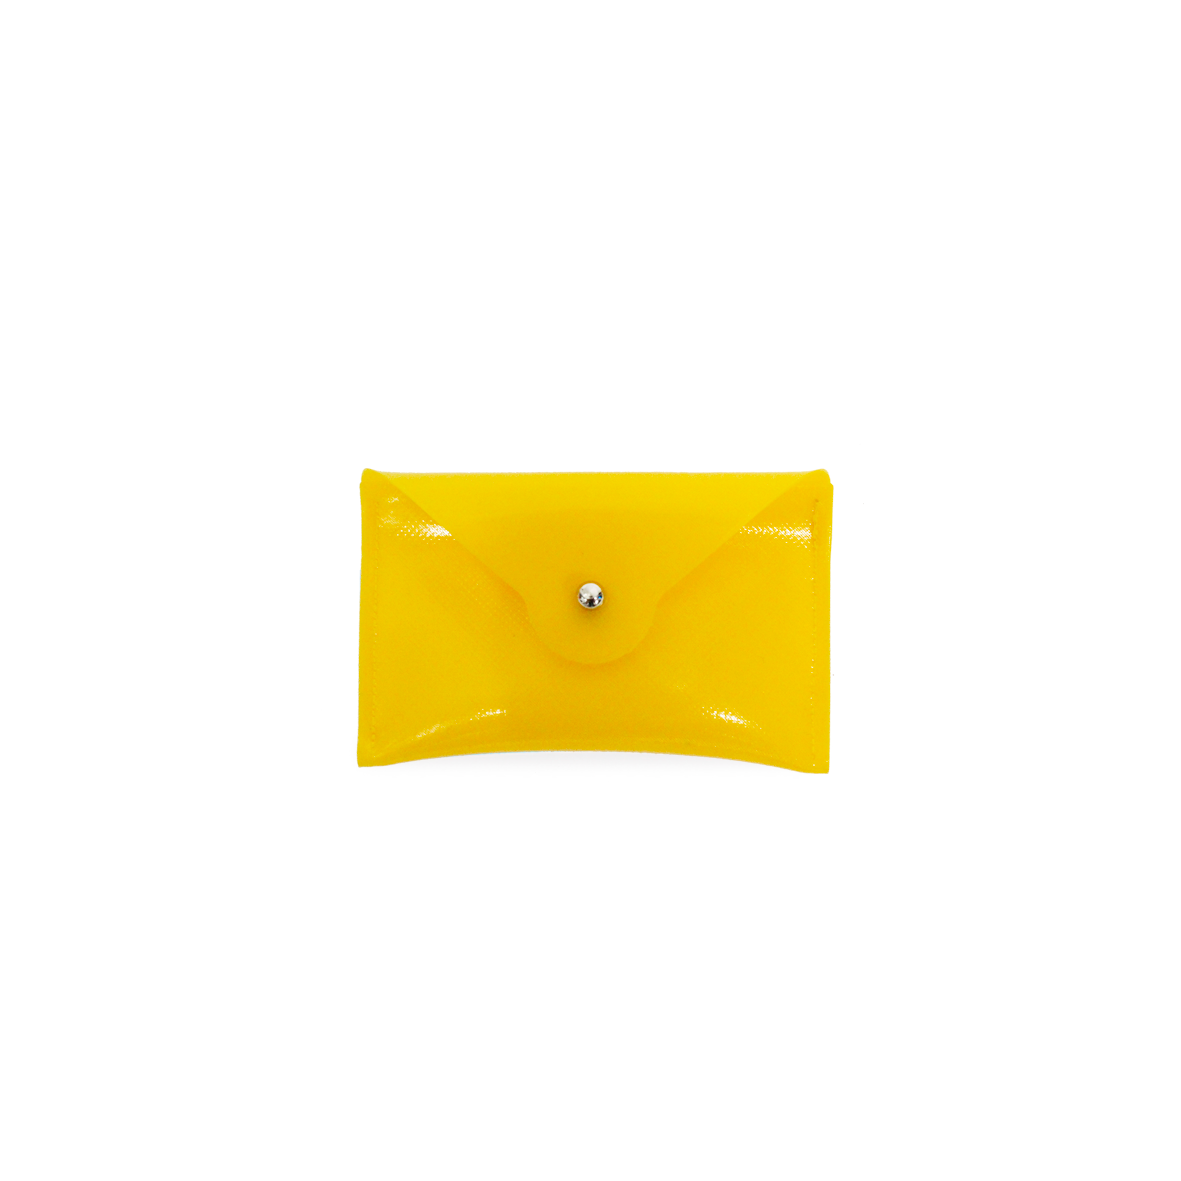 sunny origami wallet - 3 pcs